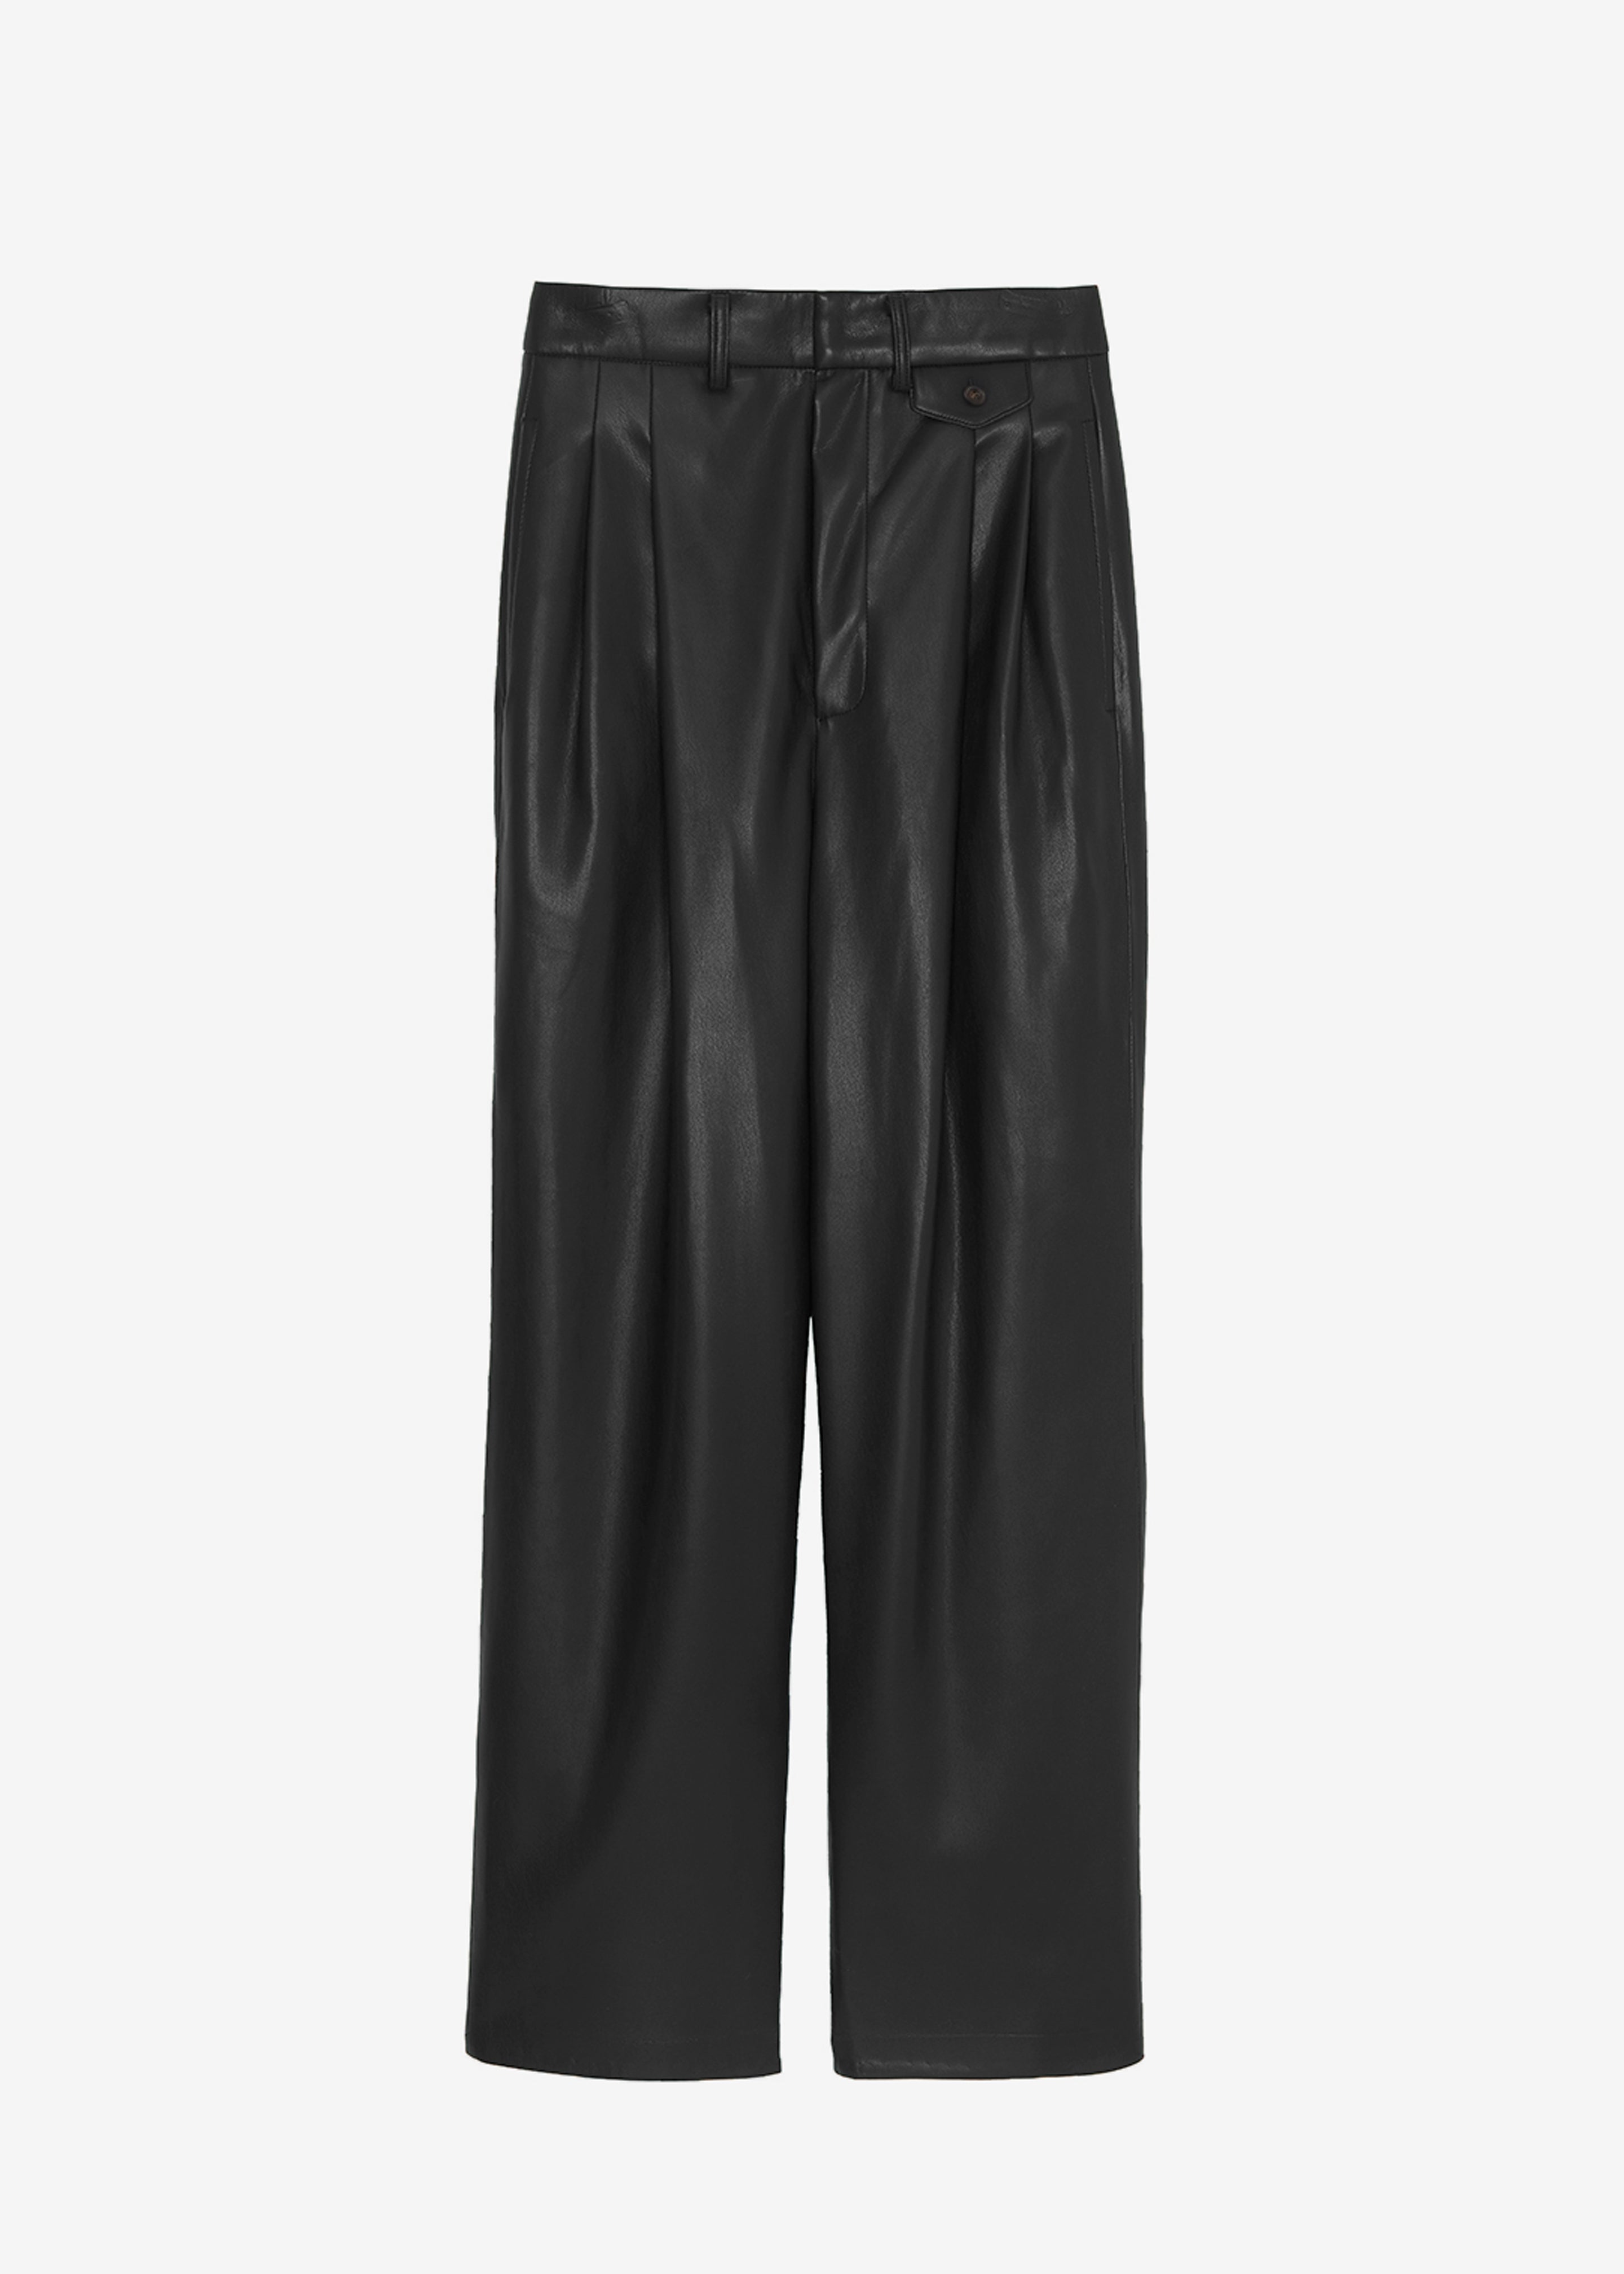 Pernille Faux Leather Pants - Black - 11